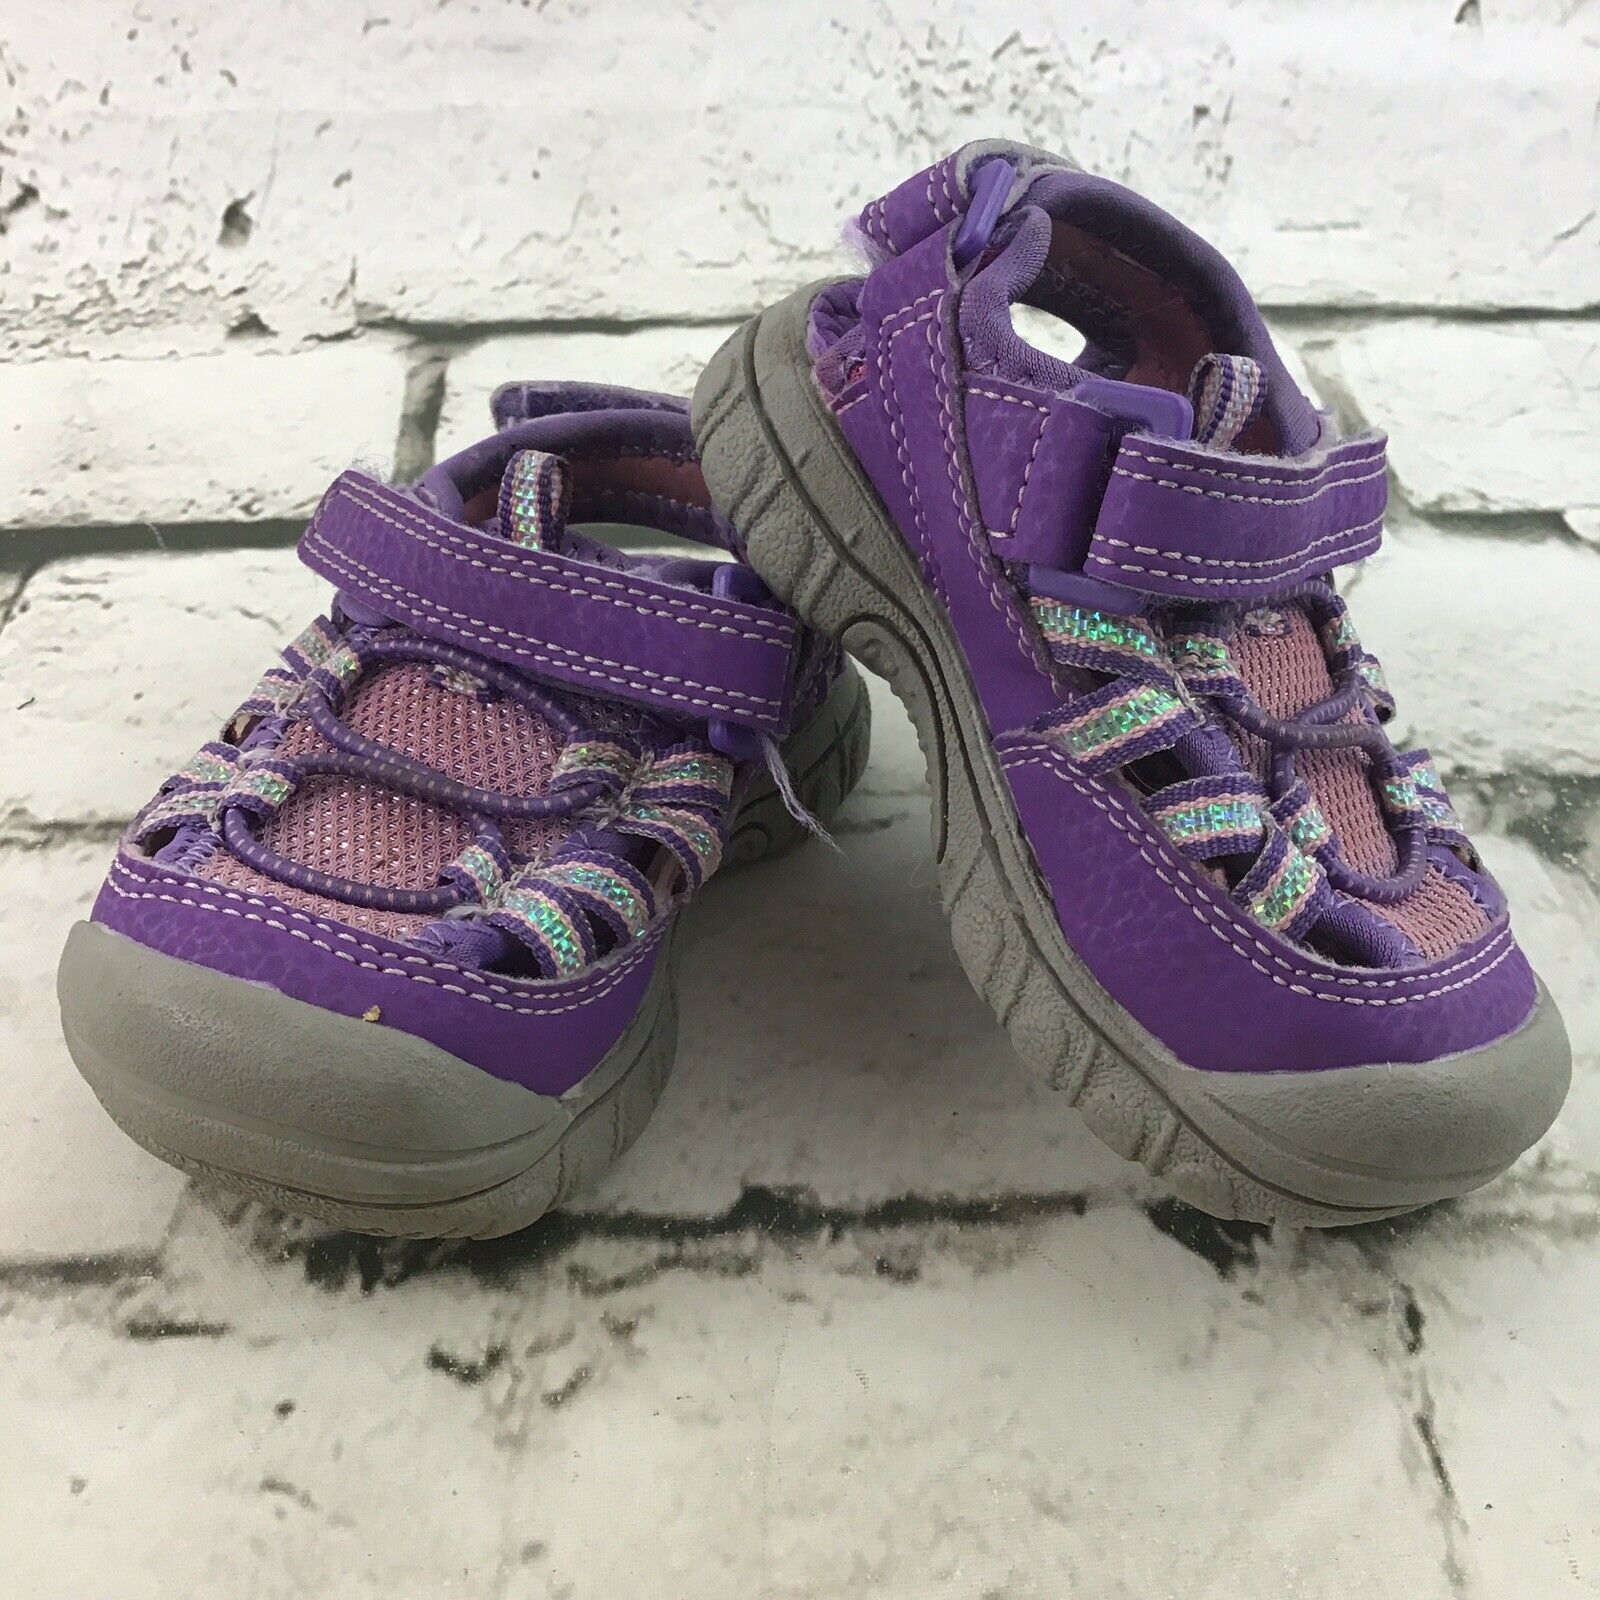 Kohls Toddler Baby Size 4 Shoes Purple Walking Trail Hiking Water Sandals